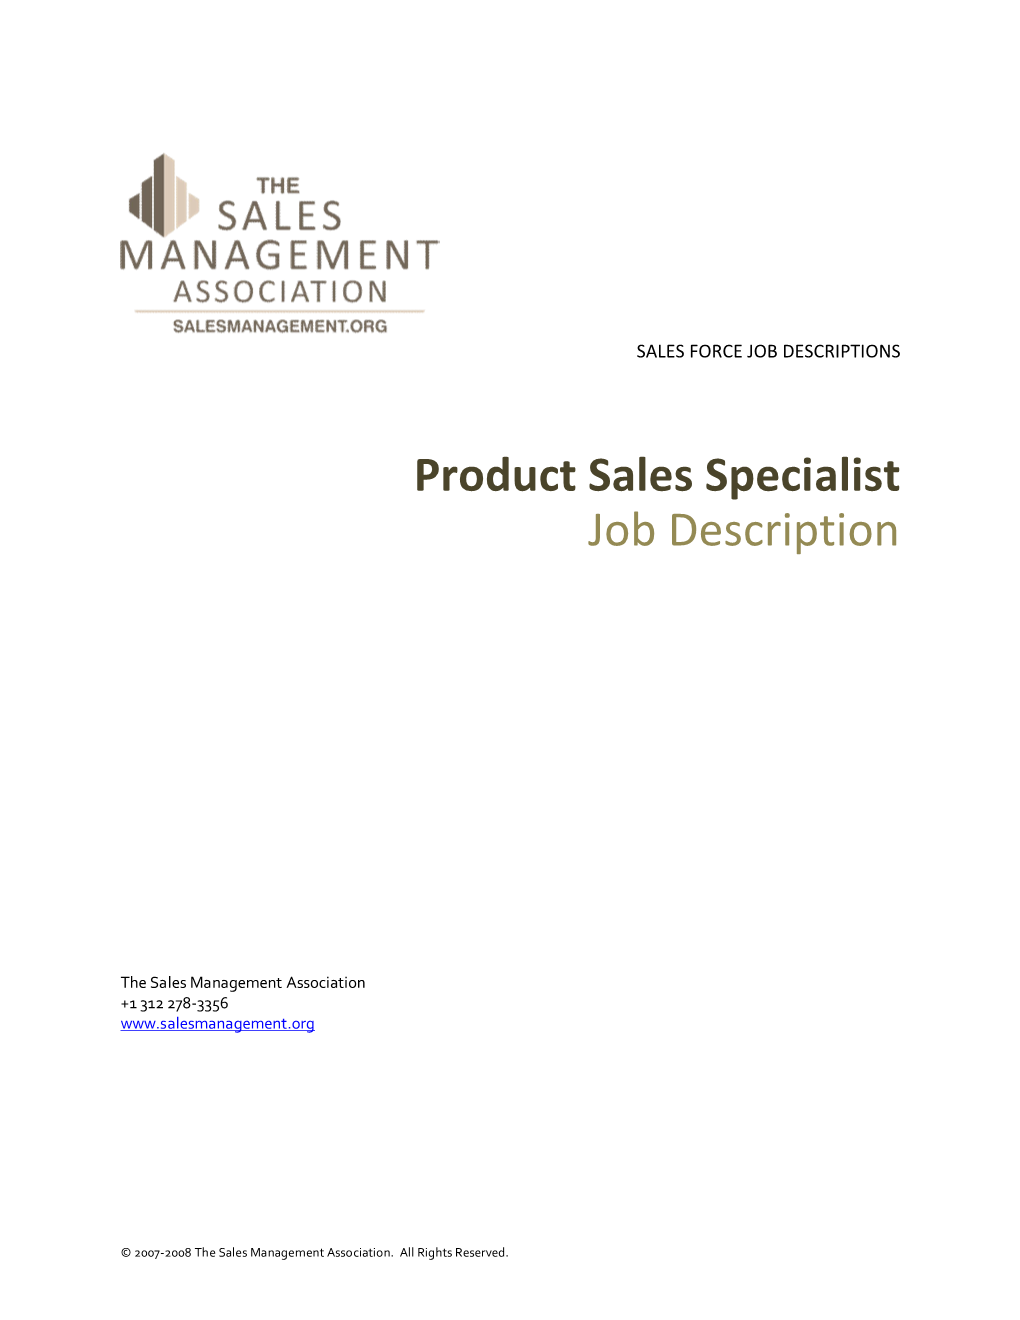 Product Sales Specialist Job Description